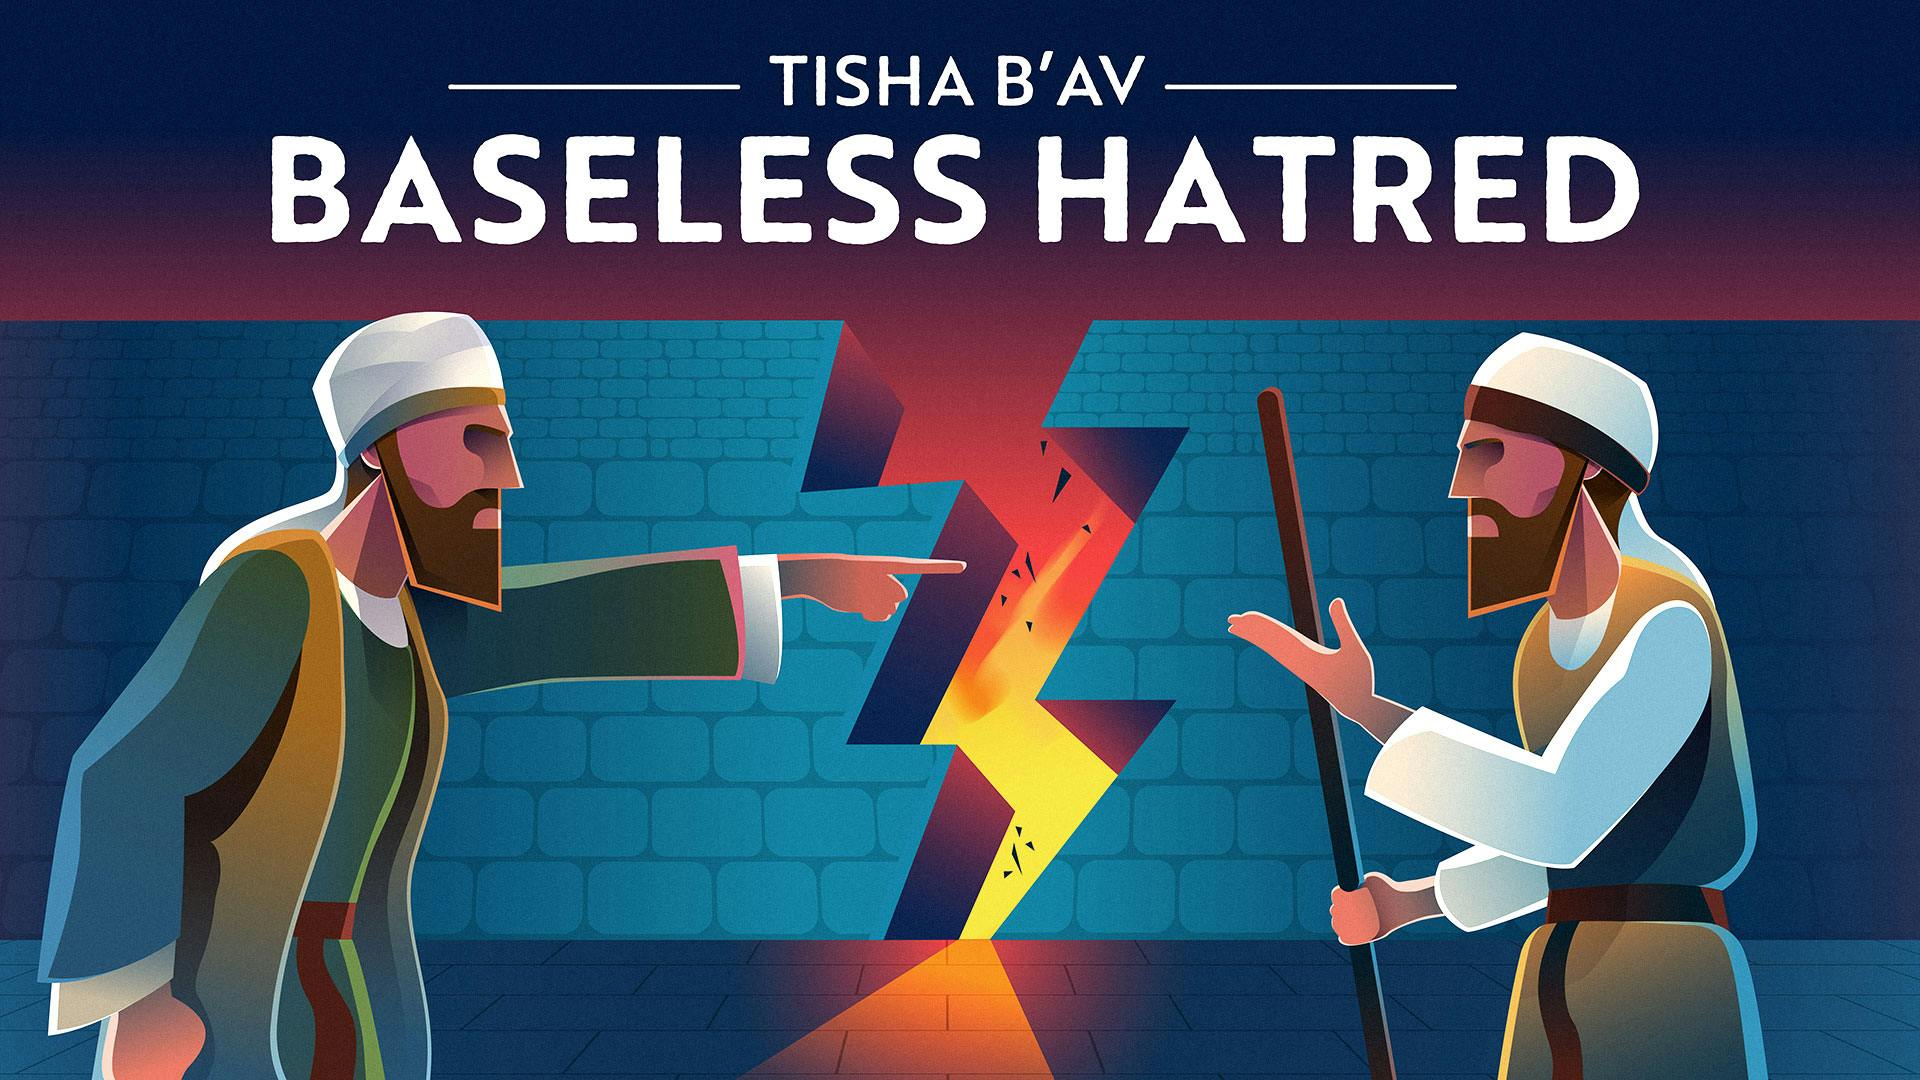 Kamtza and Bar Kamtza: What is Baseless Hatred, Anyway?